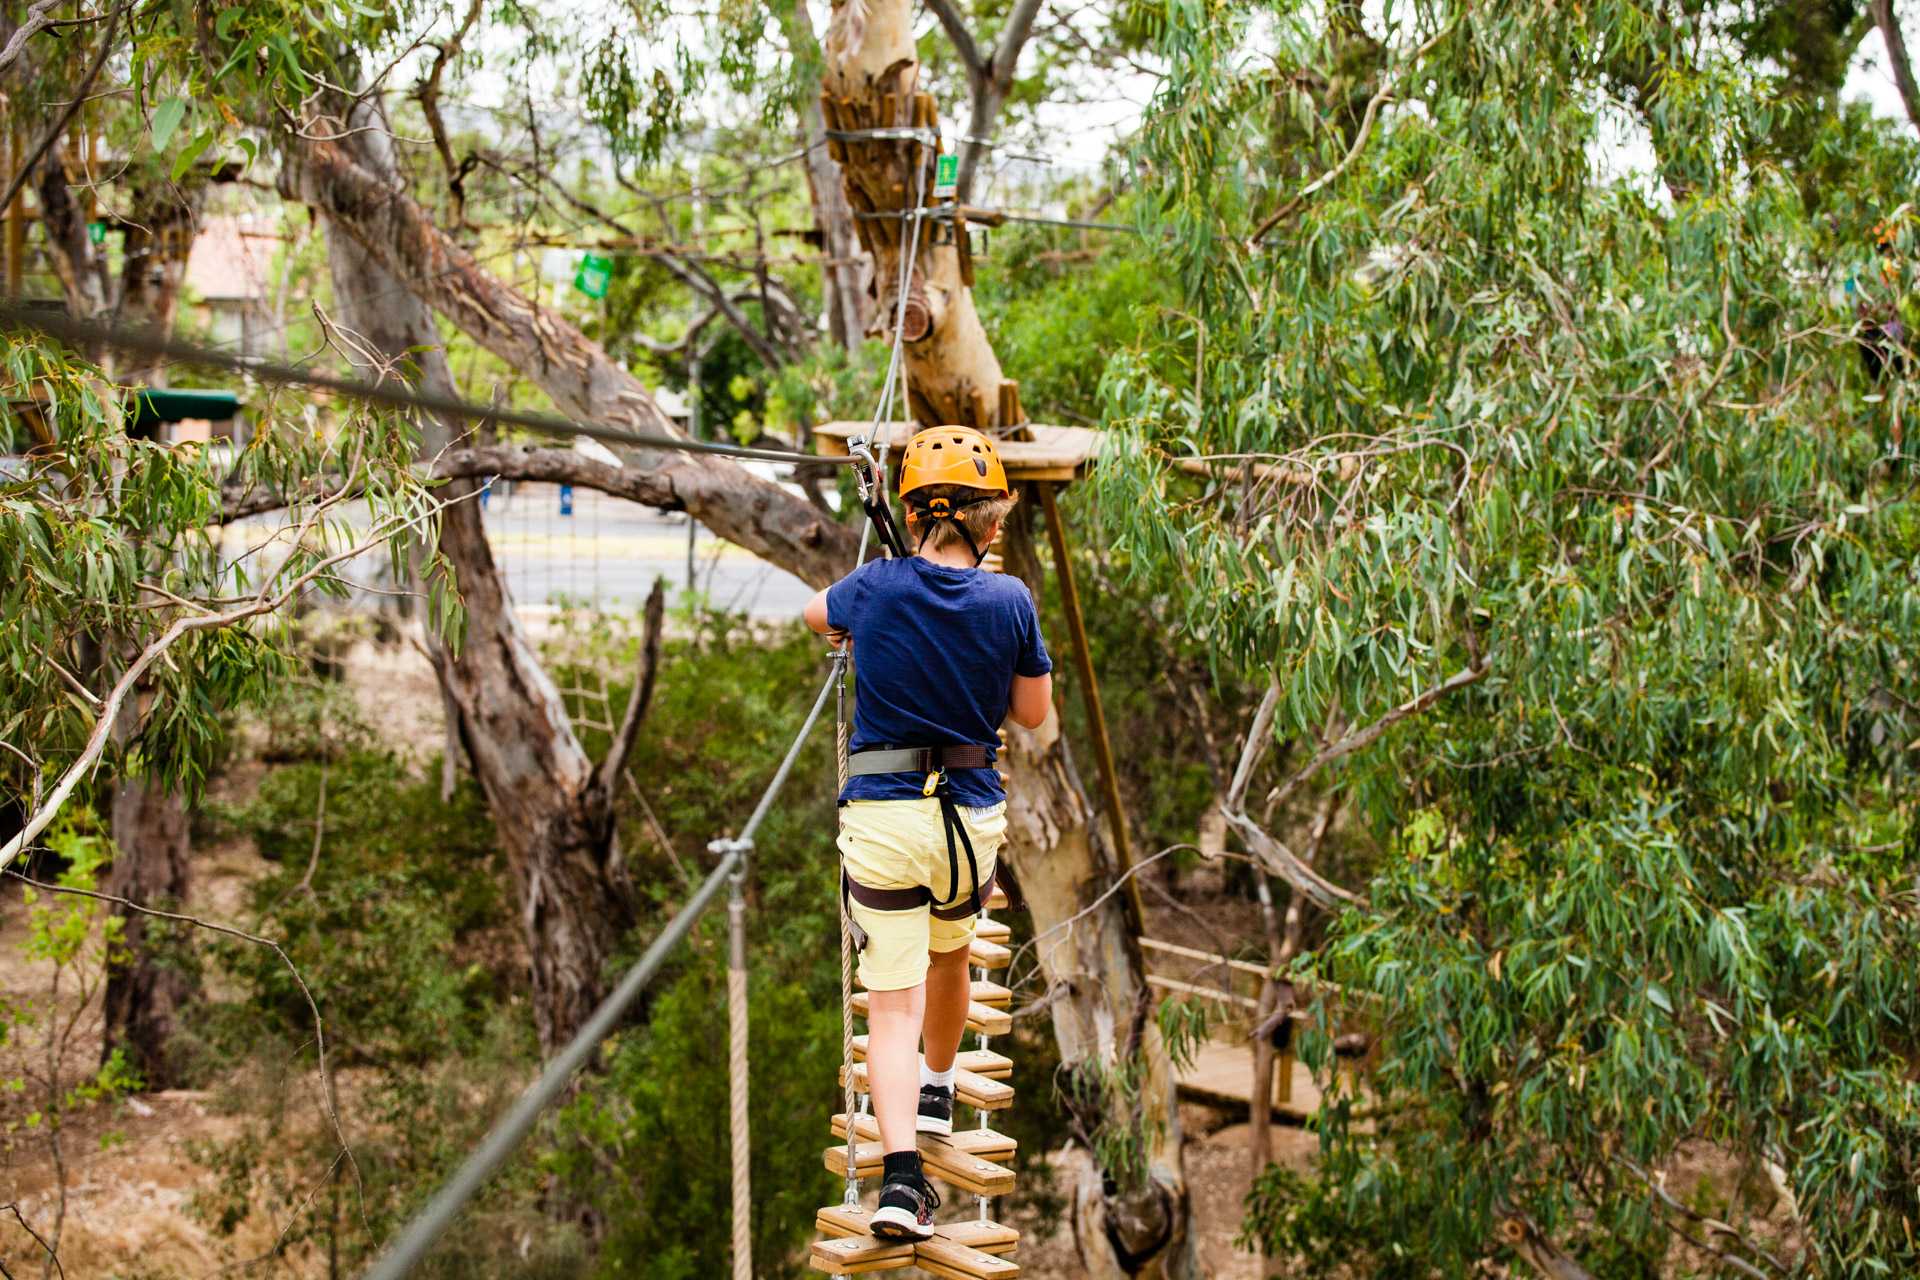 TreeClimb Adelaide Inner-City Aerial Course - Grand Course